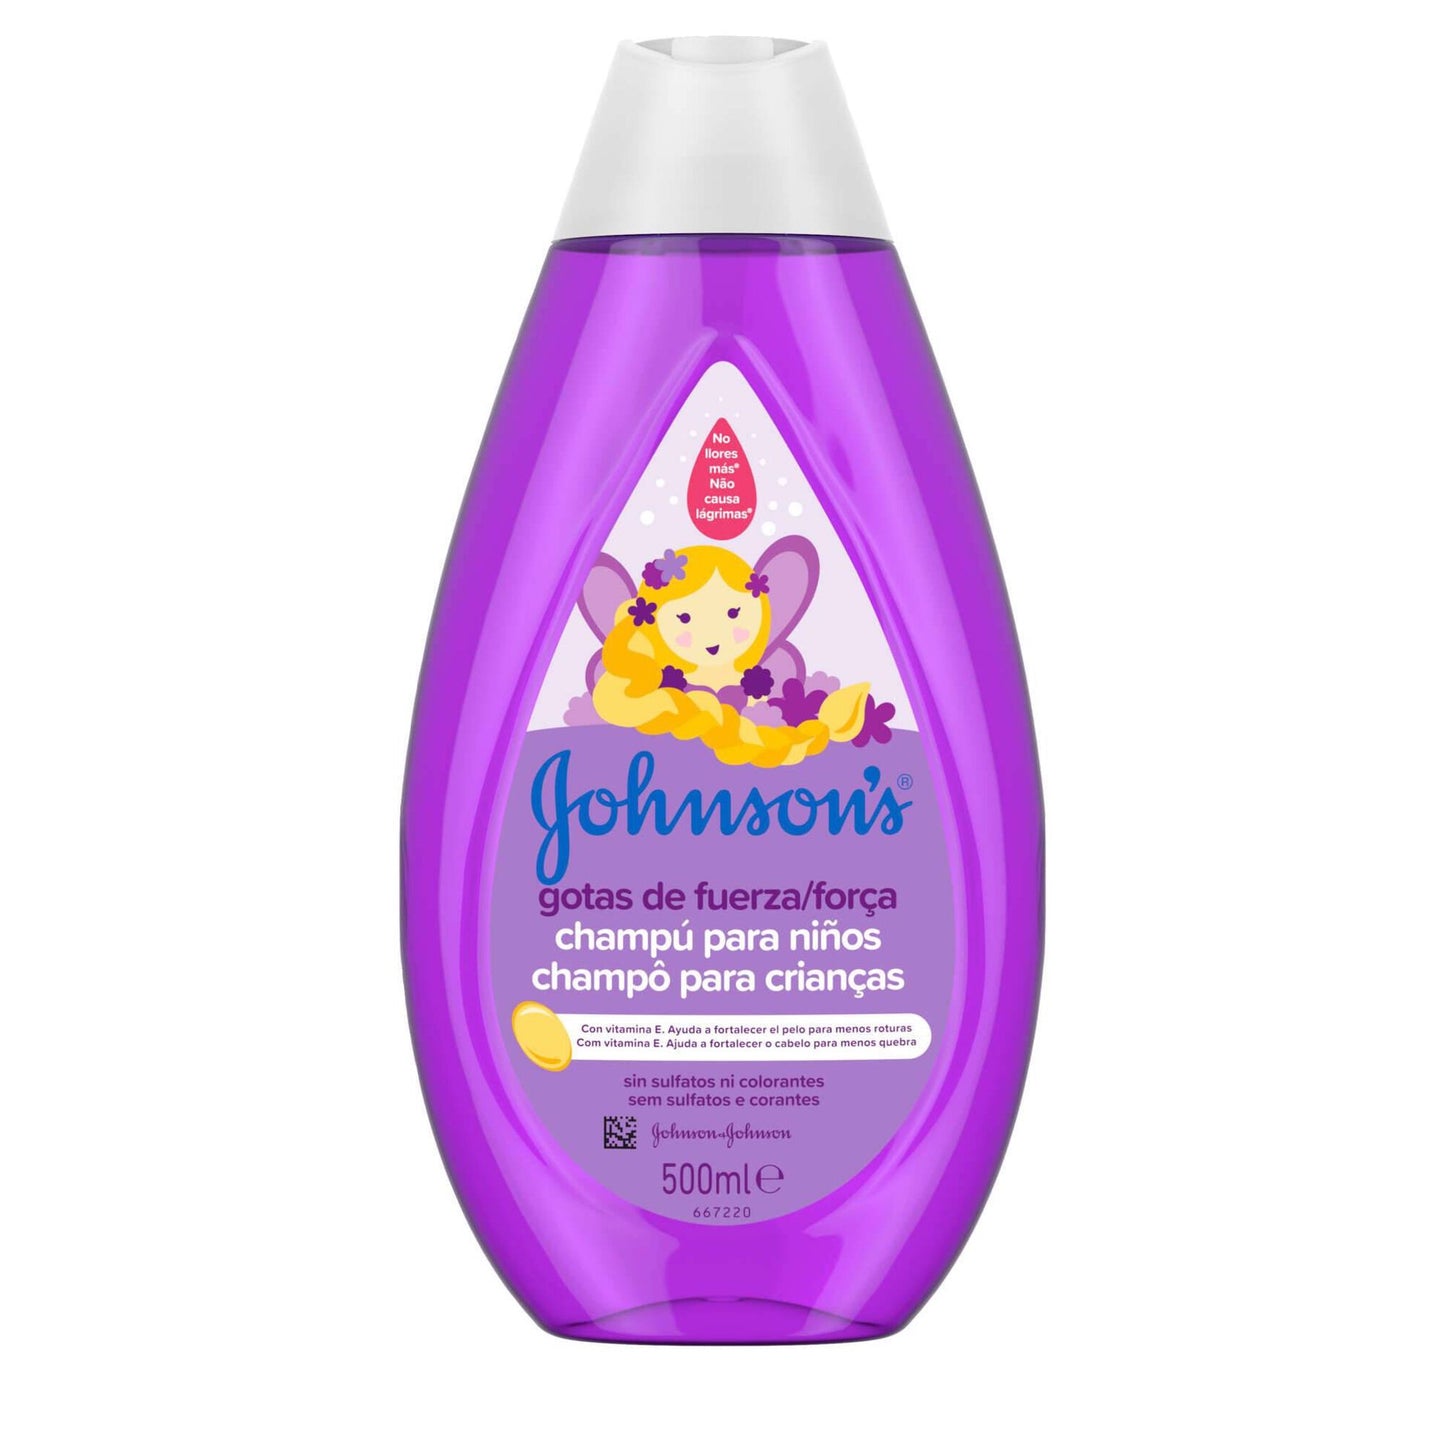 Drops of Strength Shampoo for Children Johnson's Baby 500ml